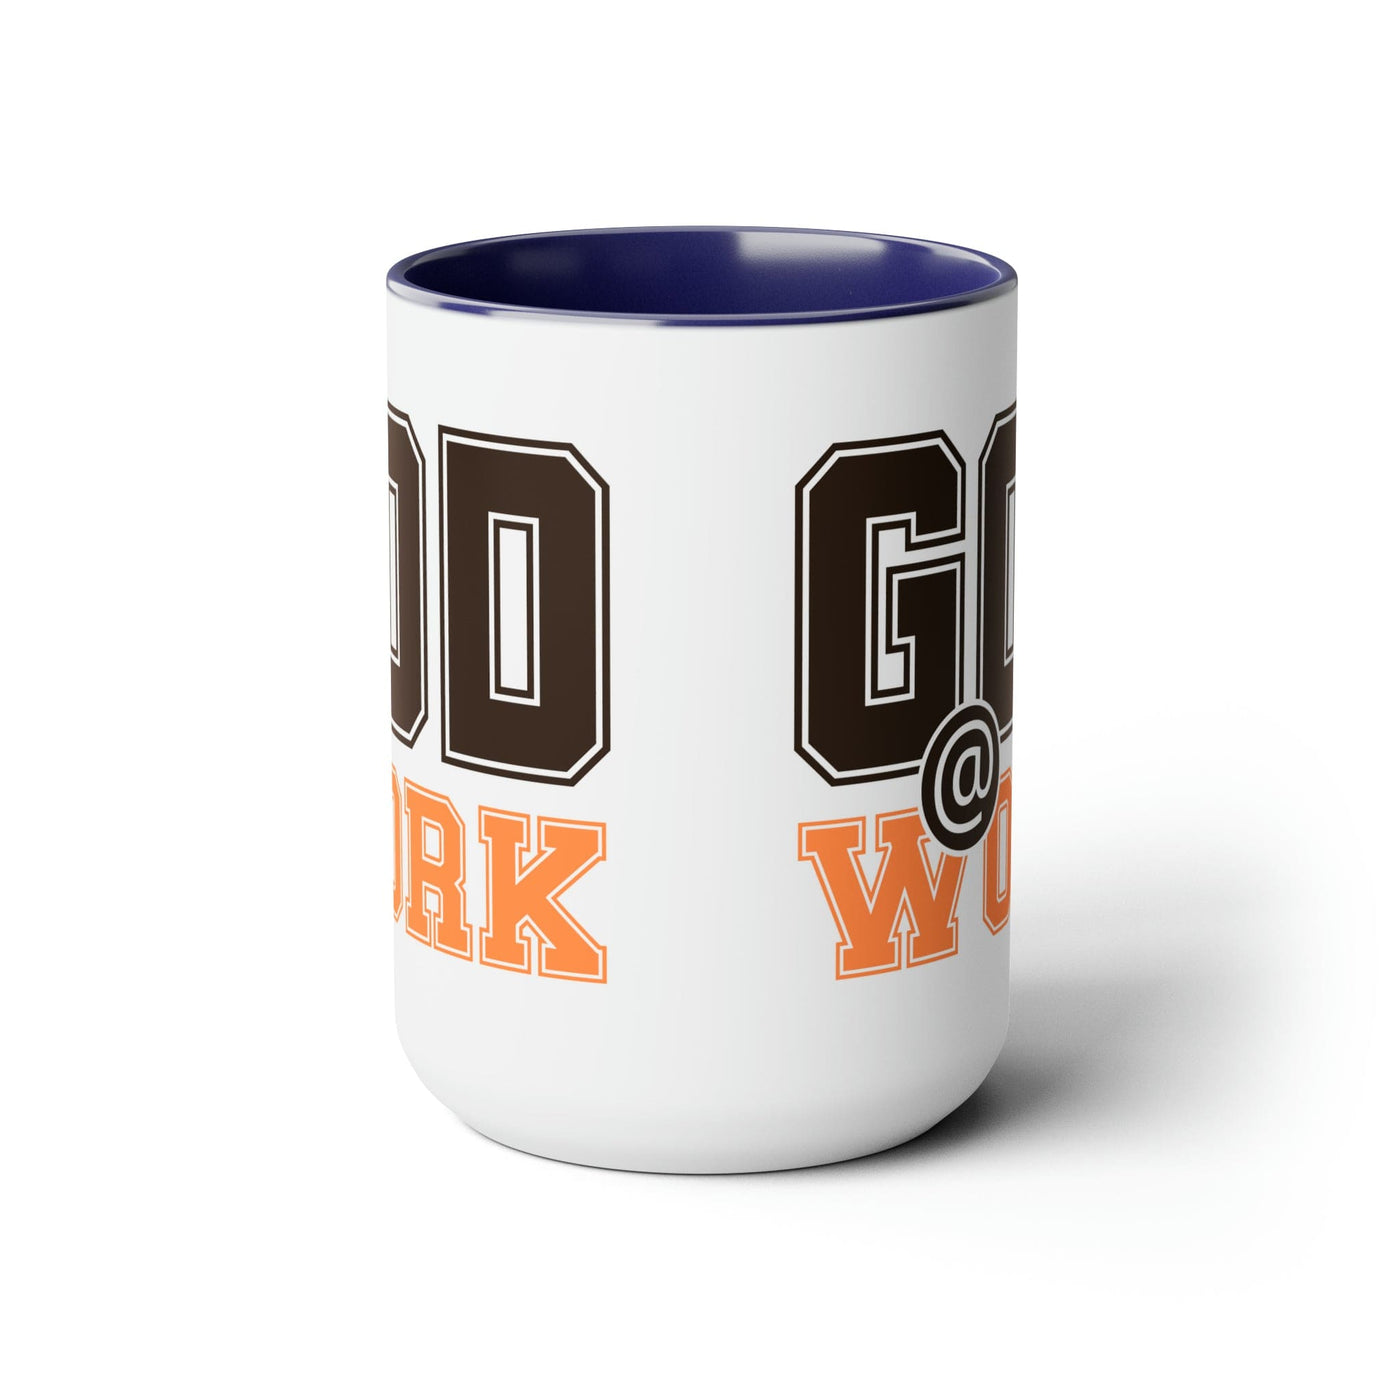 Accent Ceramic Coffee Mug 15oz - God @ Work Brown And Orange Print - Decorative